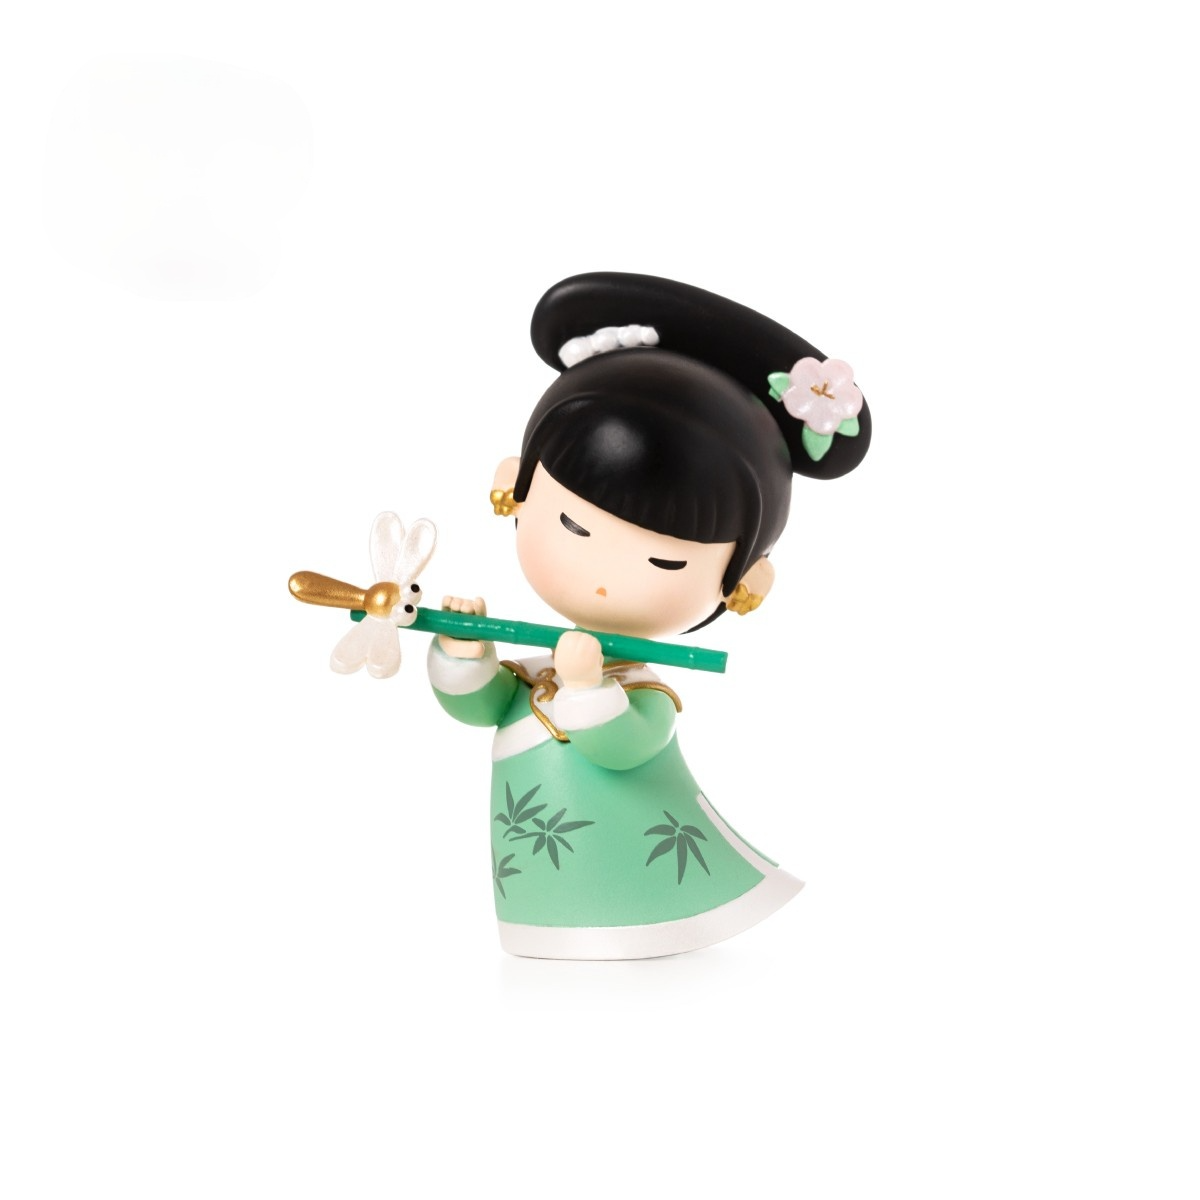 Forbidden City Characters Action Figures-STYLEGOING